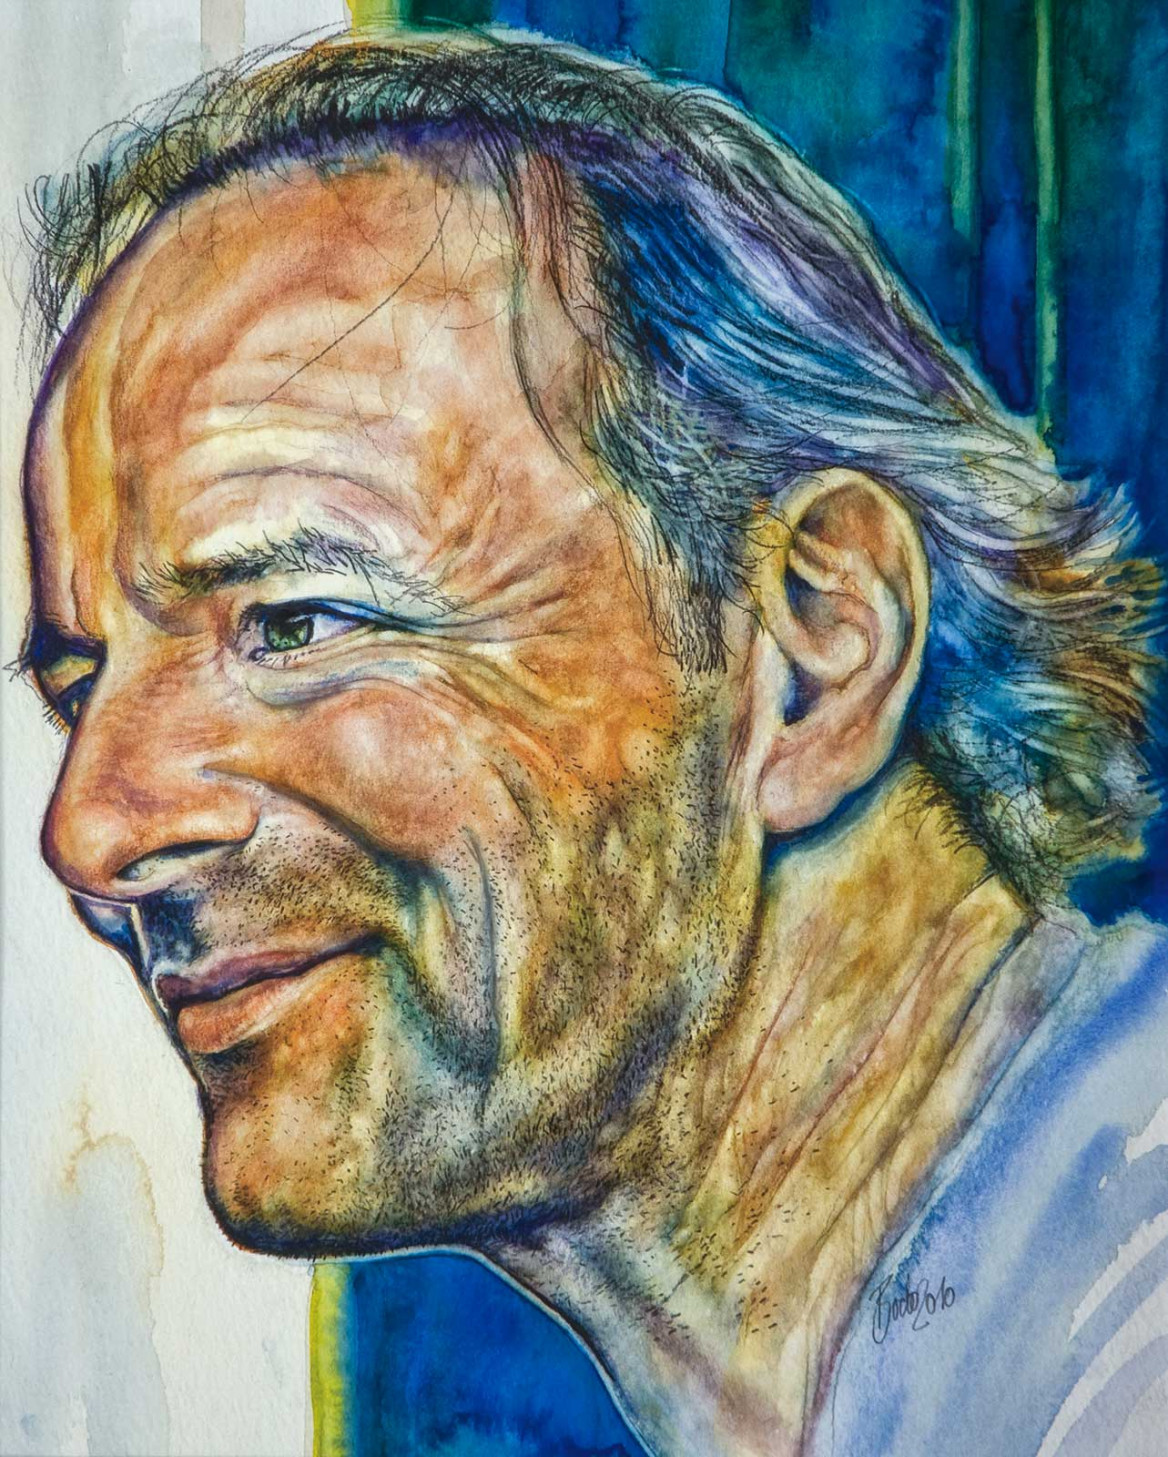 Portrait of Bernhard painted in watercolors and colored pencils Porträt von Bernhard in Aquarell mit Farbstiften